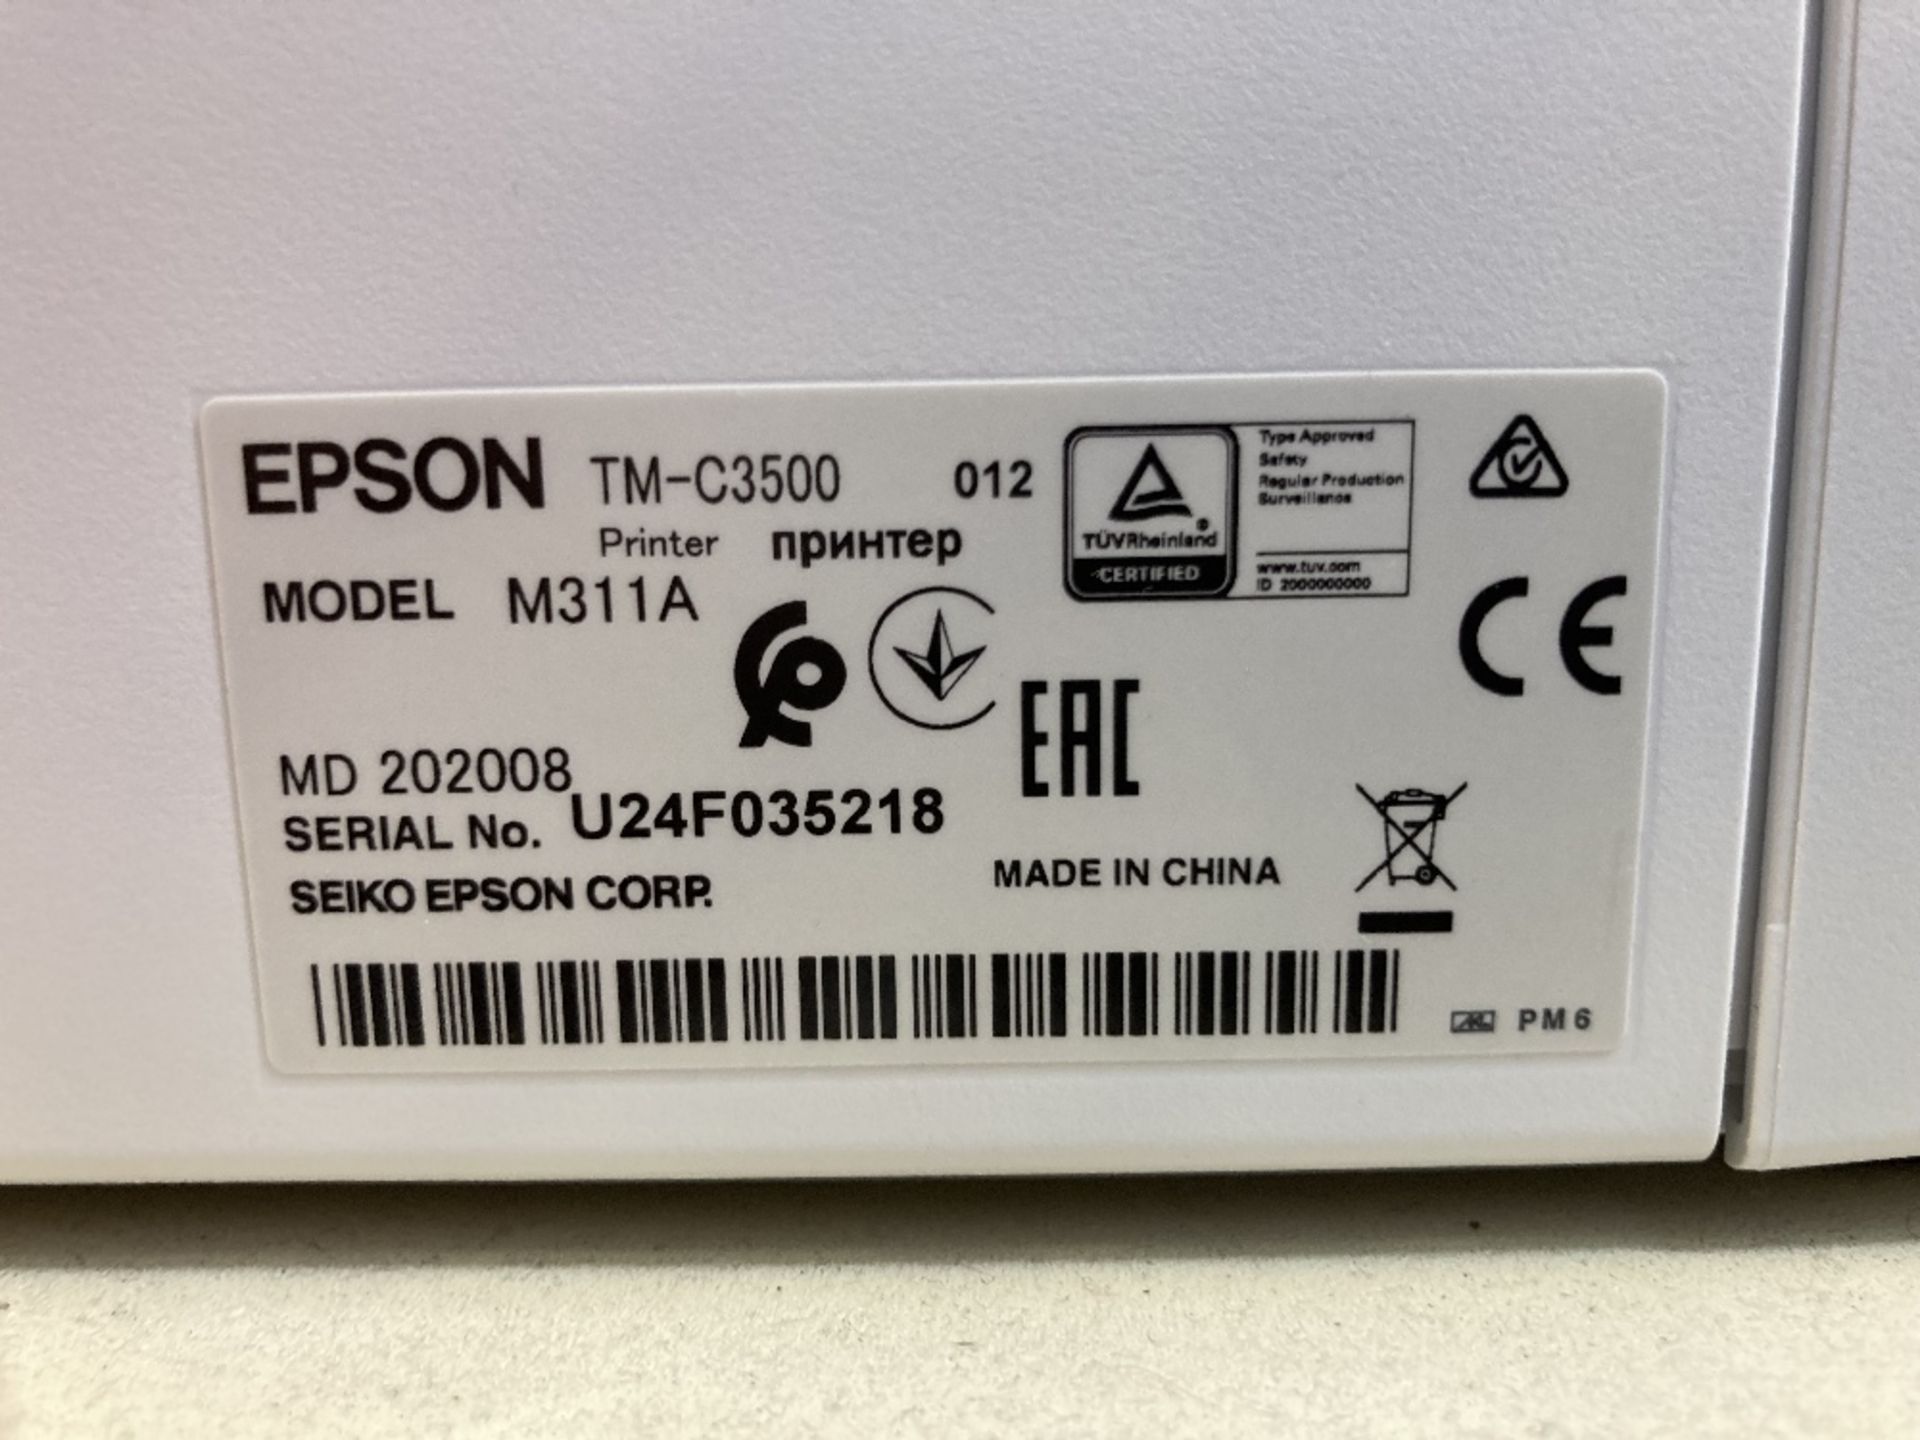 Epson TM-C3500 M311A Printer - Image 3 of 5